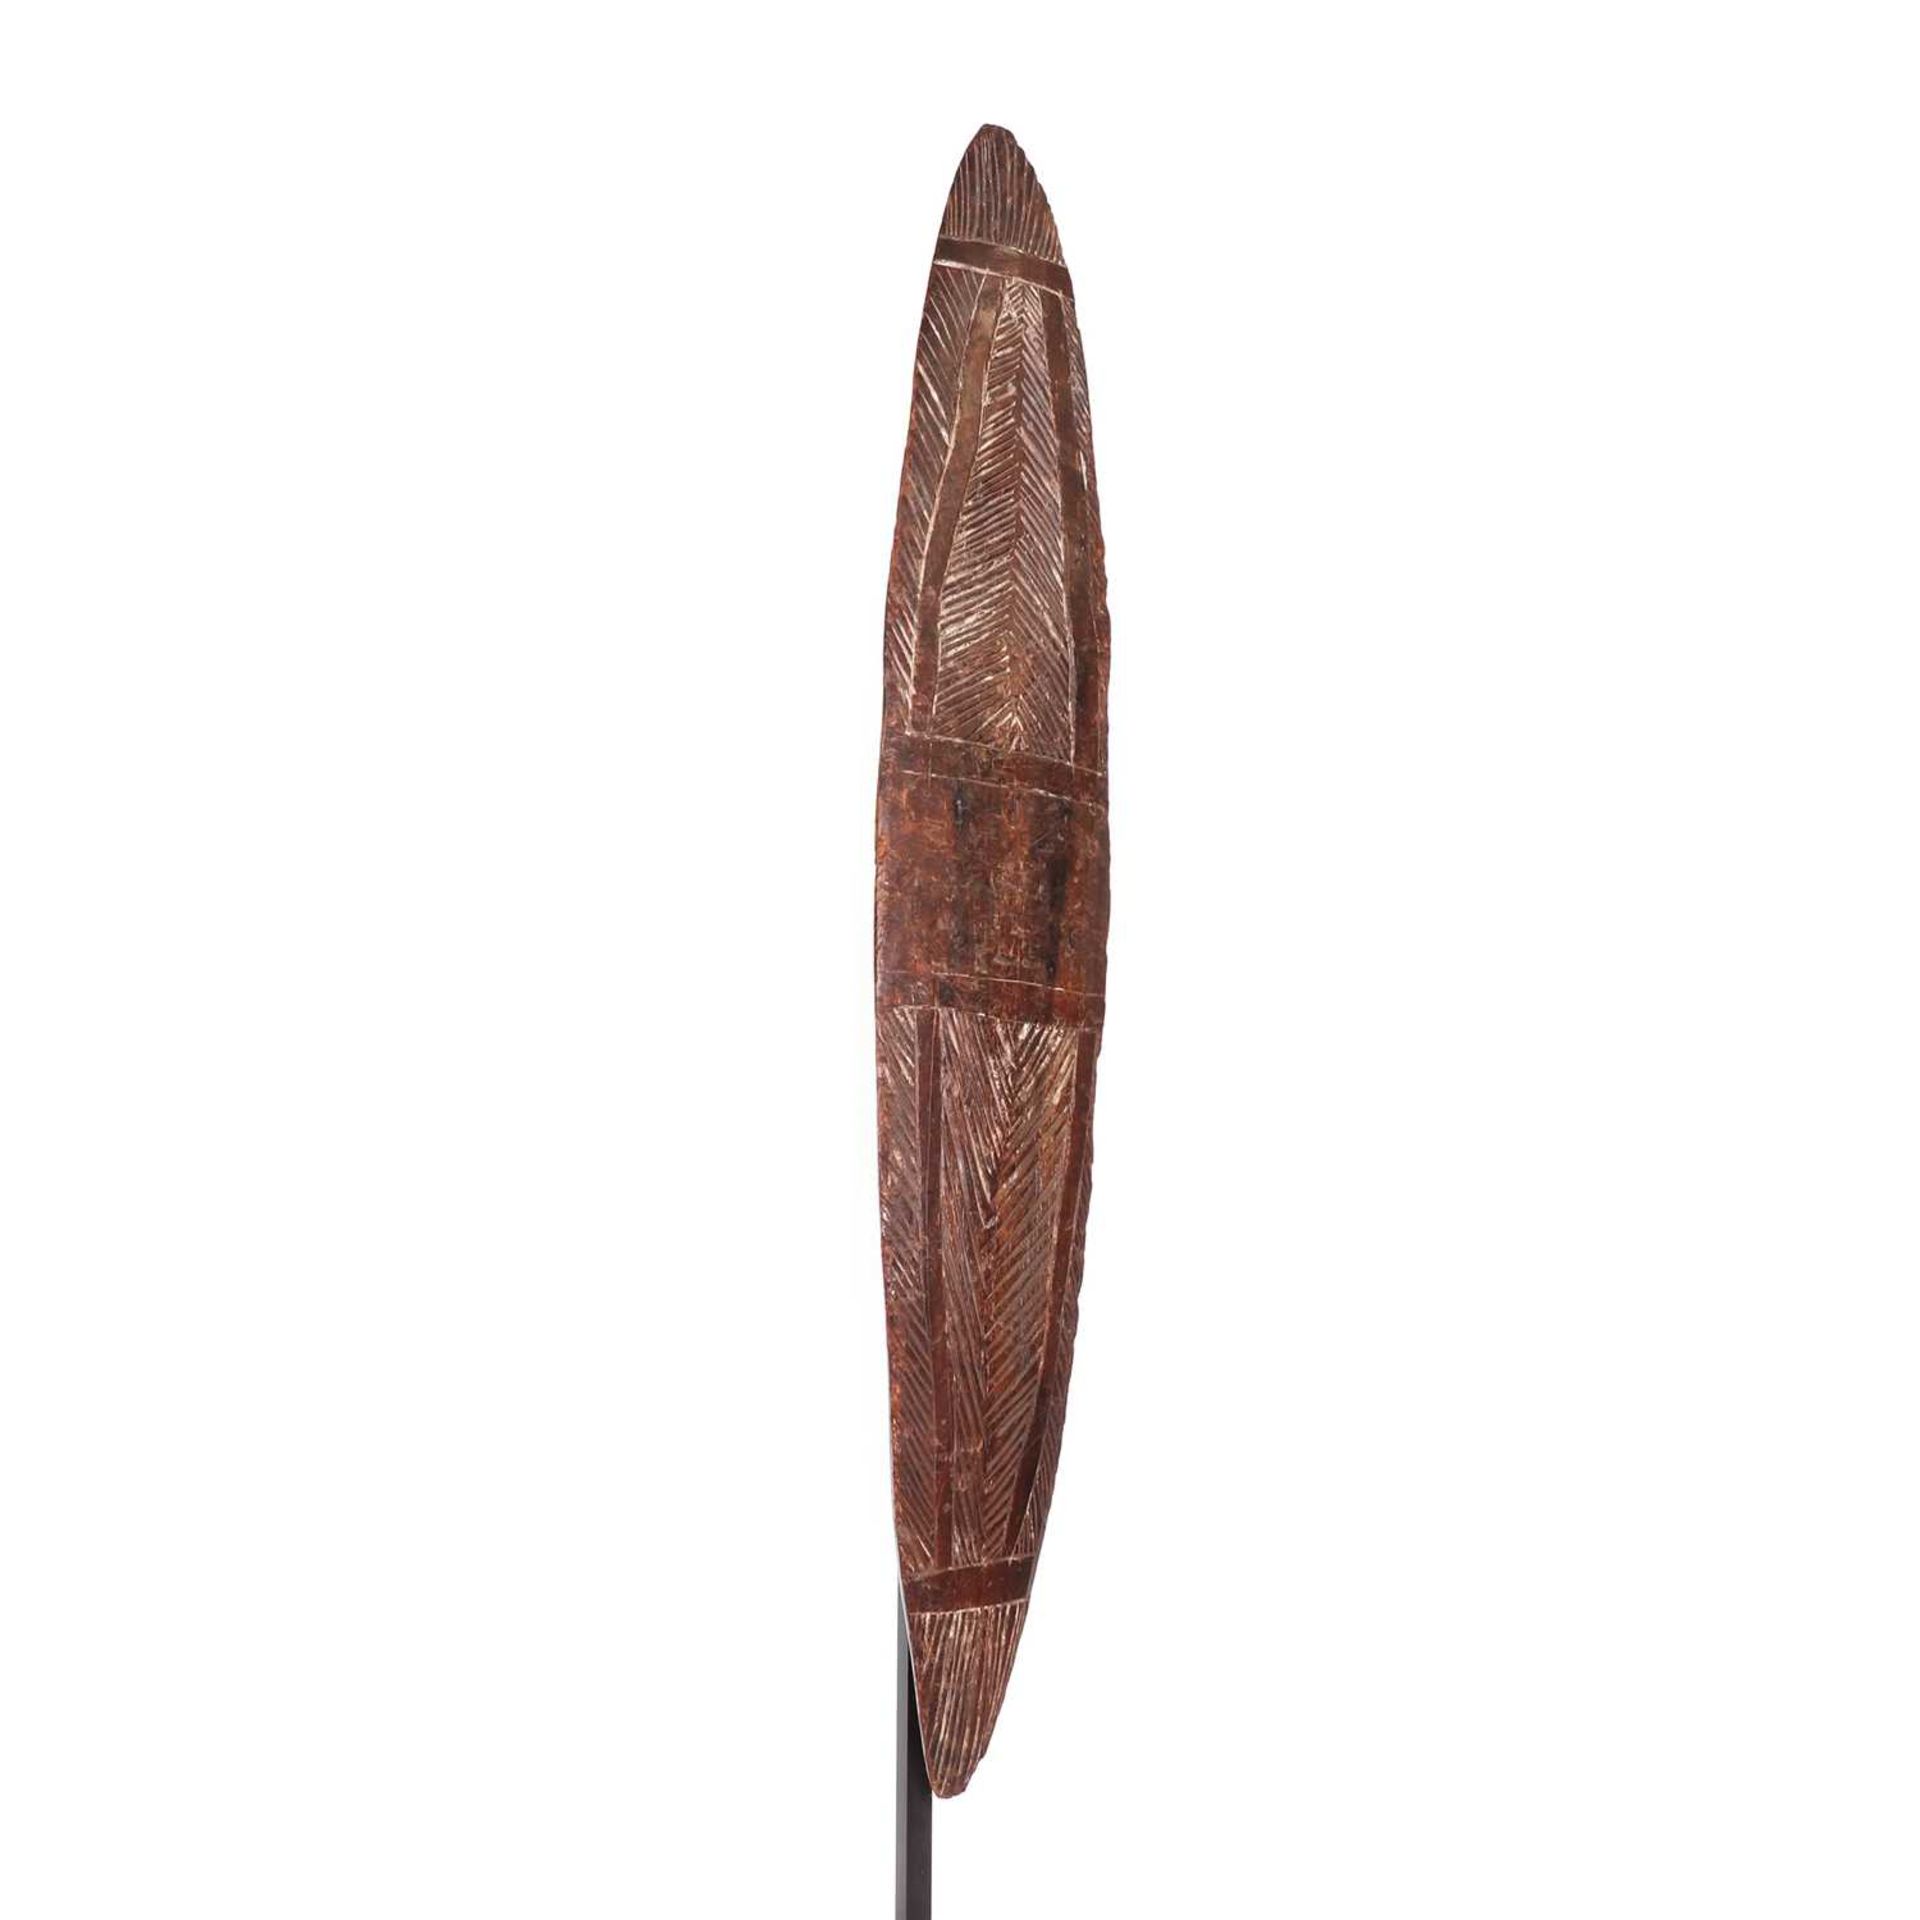 A rare Australian Aboriginal hardwood parrying shield, - Image 2 of 5